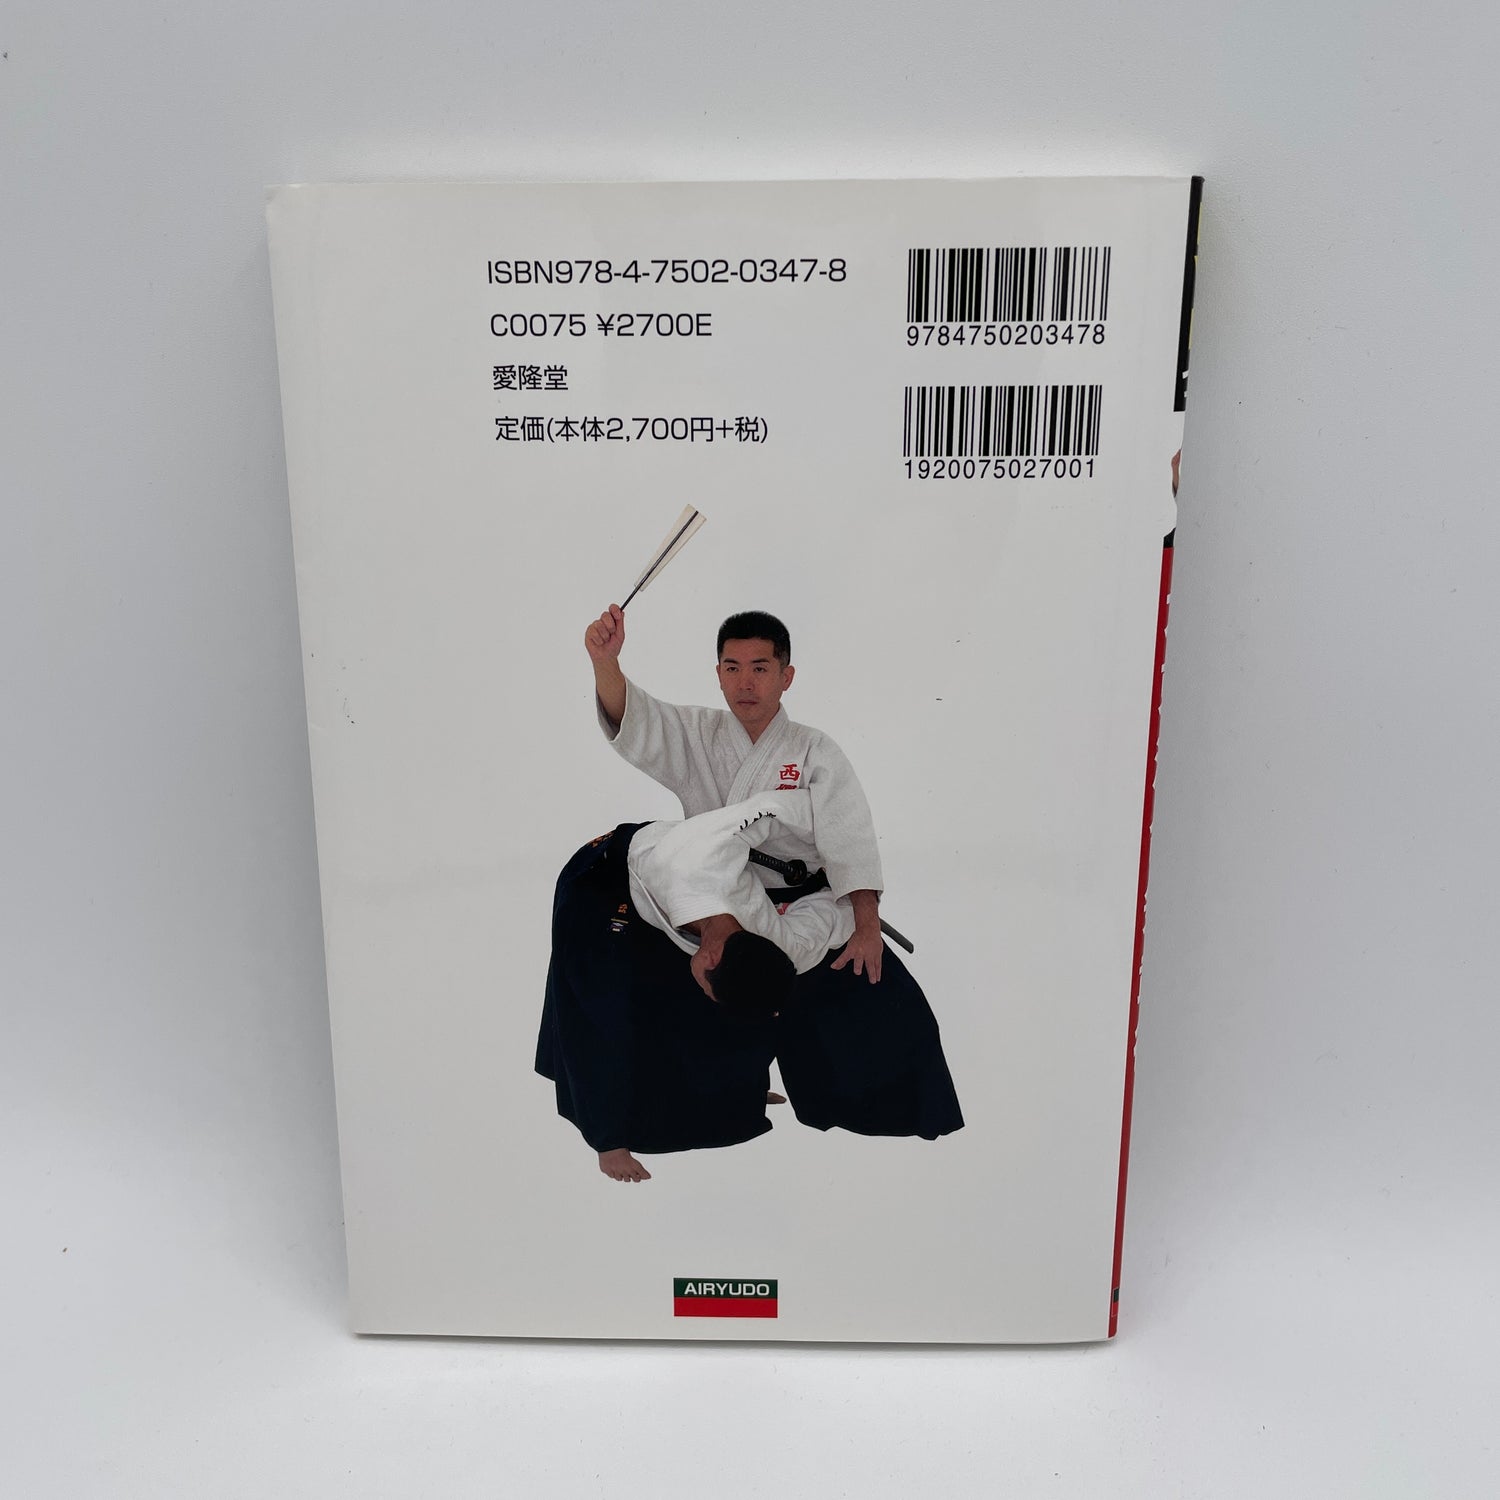 Daito Ryu Aikibujutsu Book & DVD by Kazuoki Sogawa (Preowned)